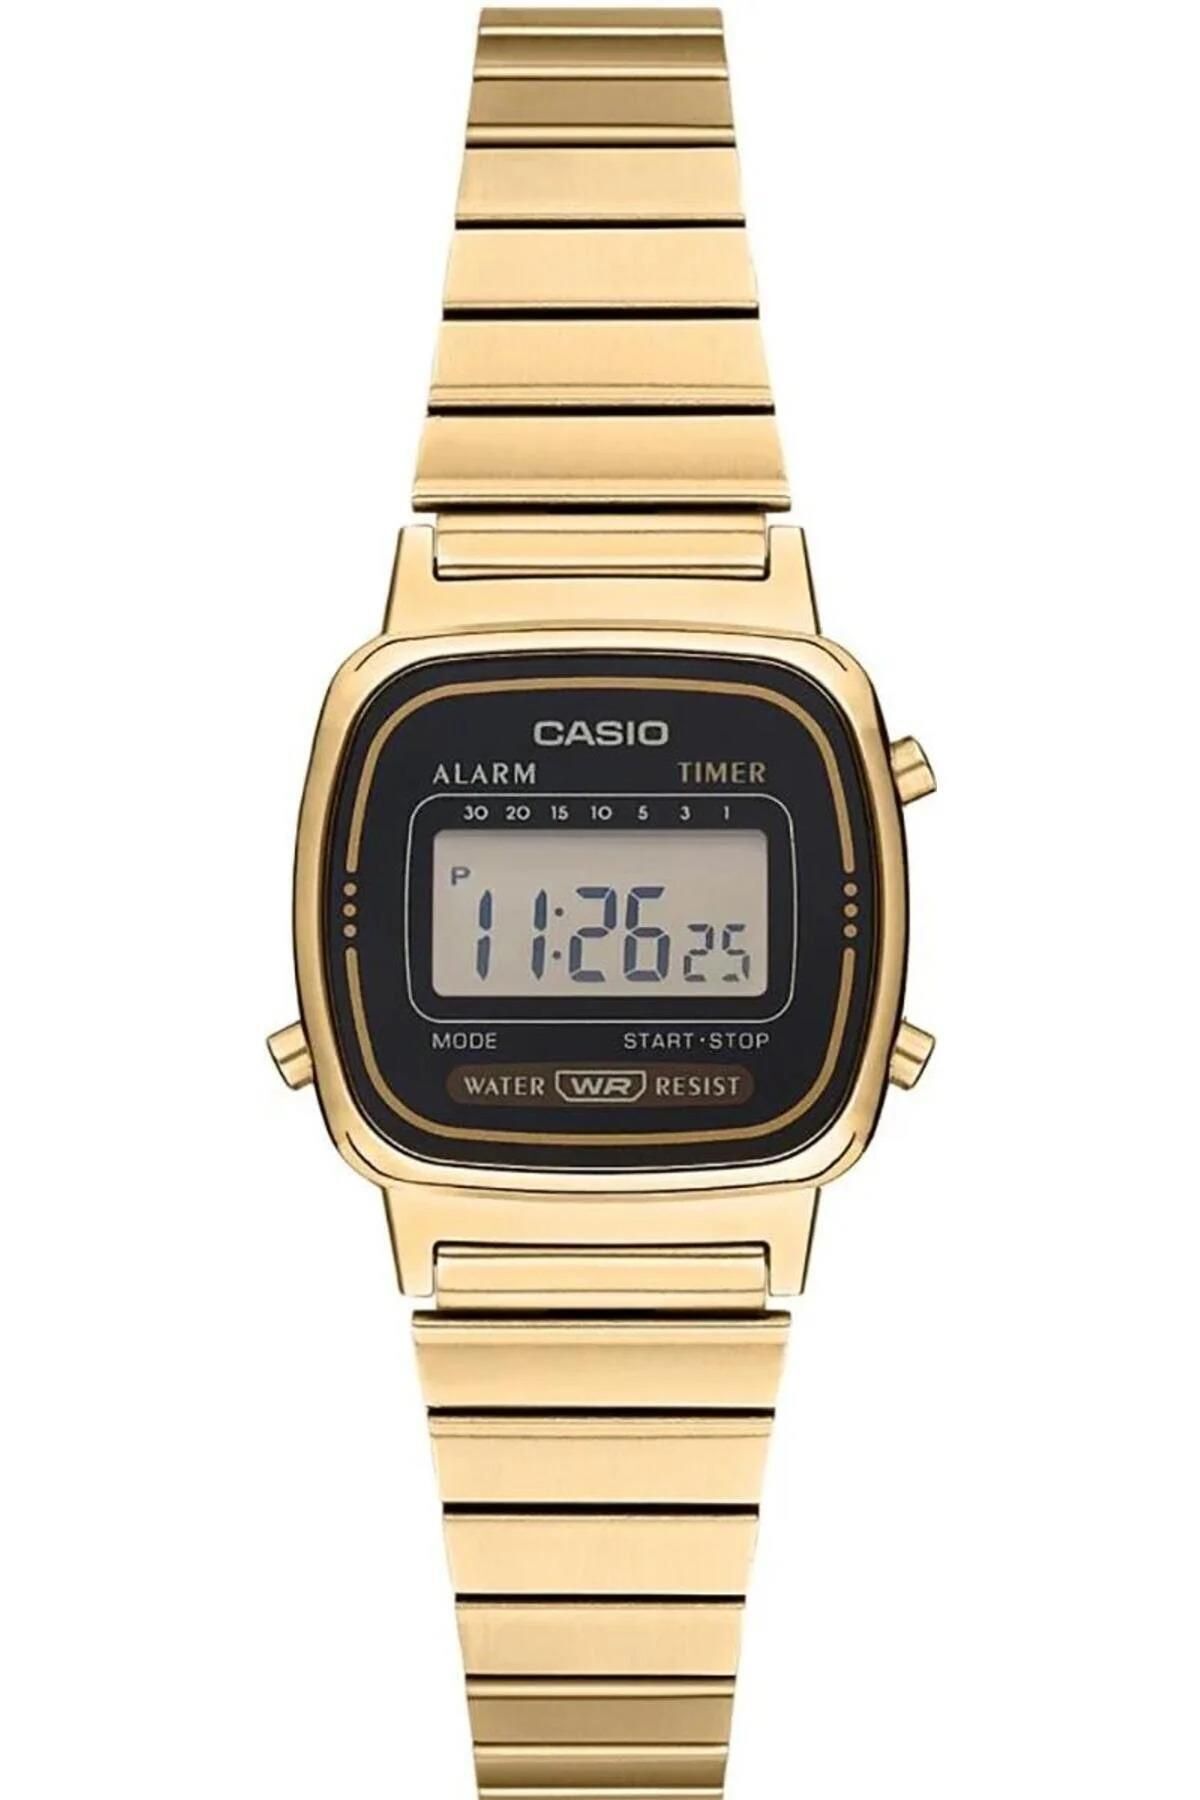 Casio La670wga-1df Kadın Retro Kol Saati